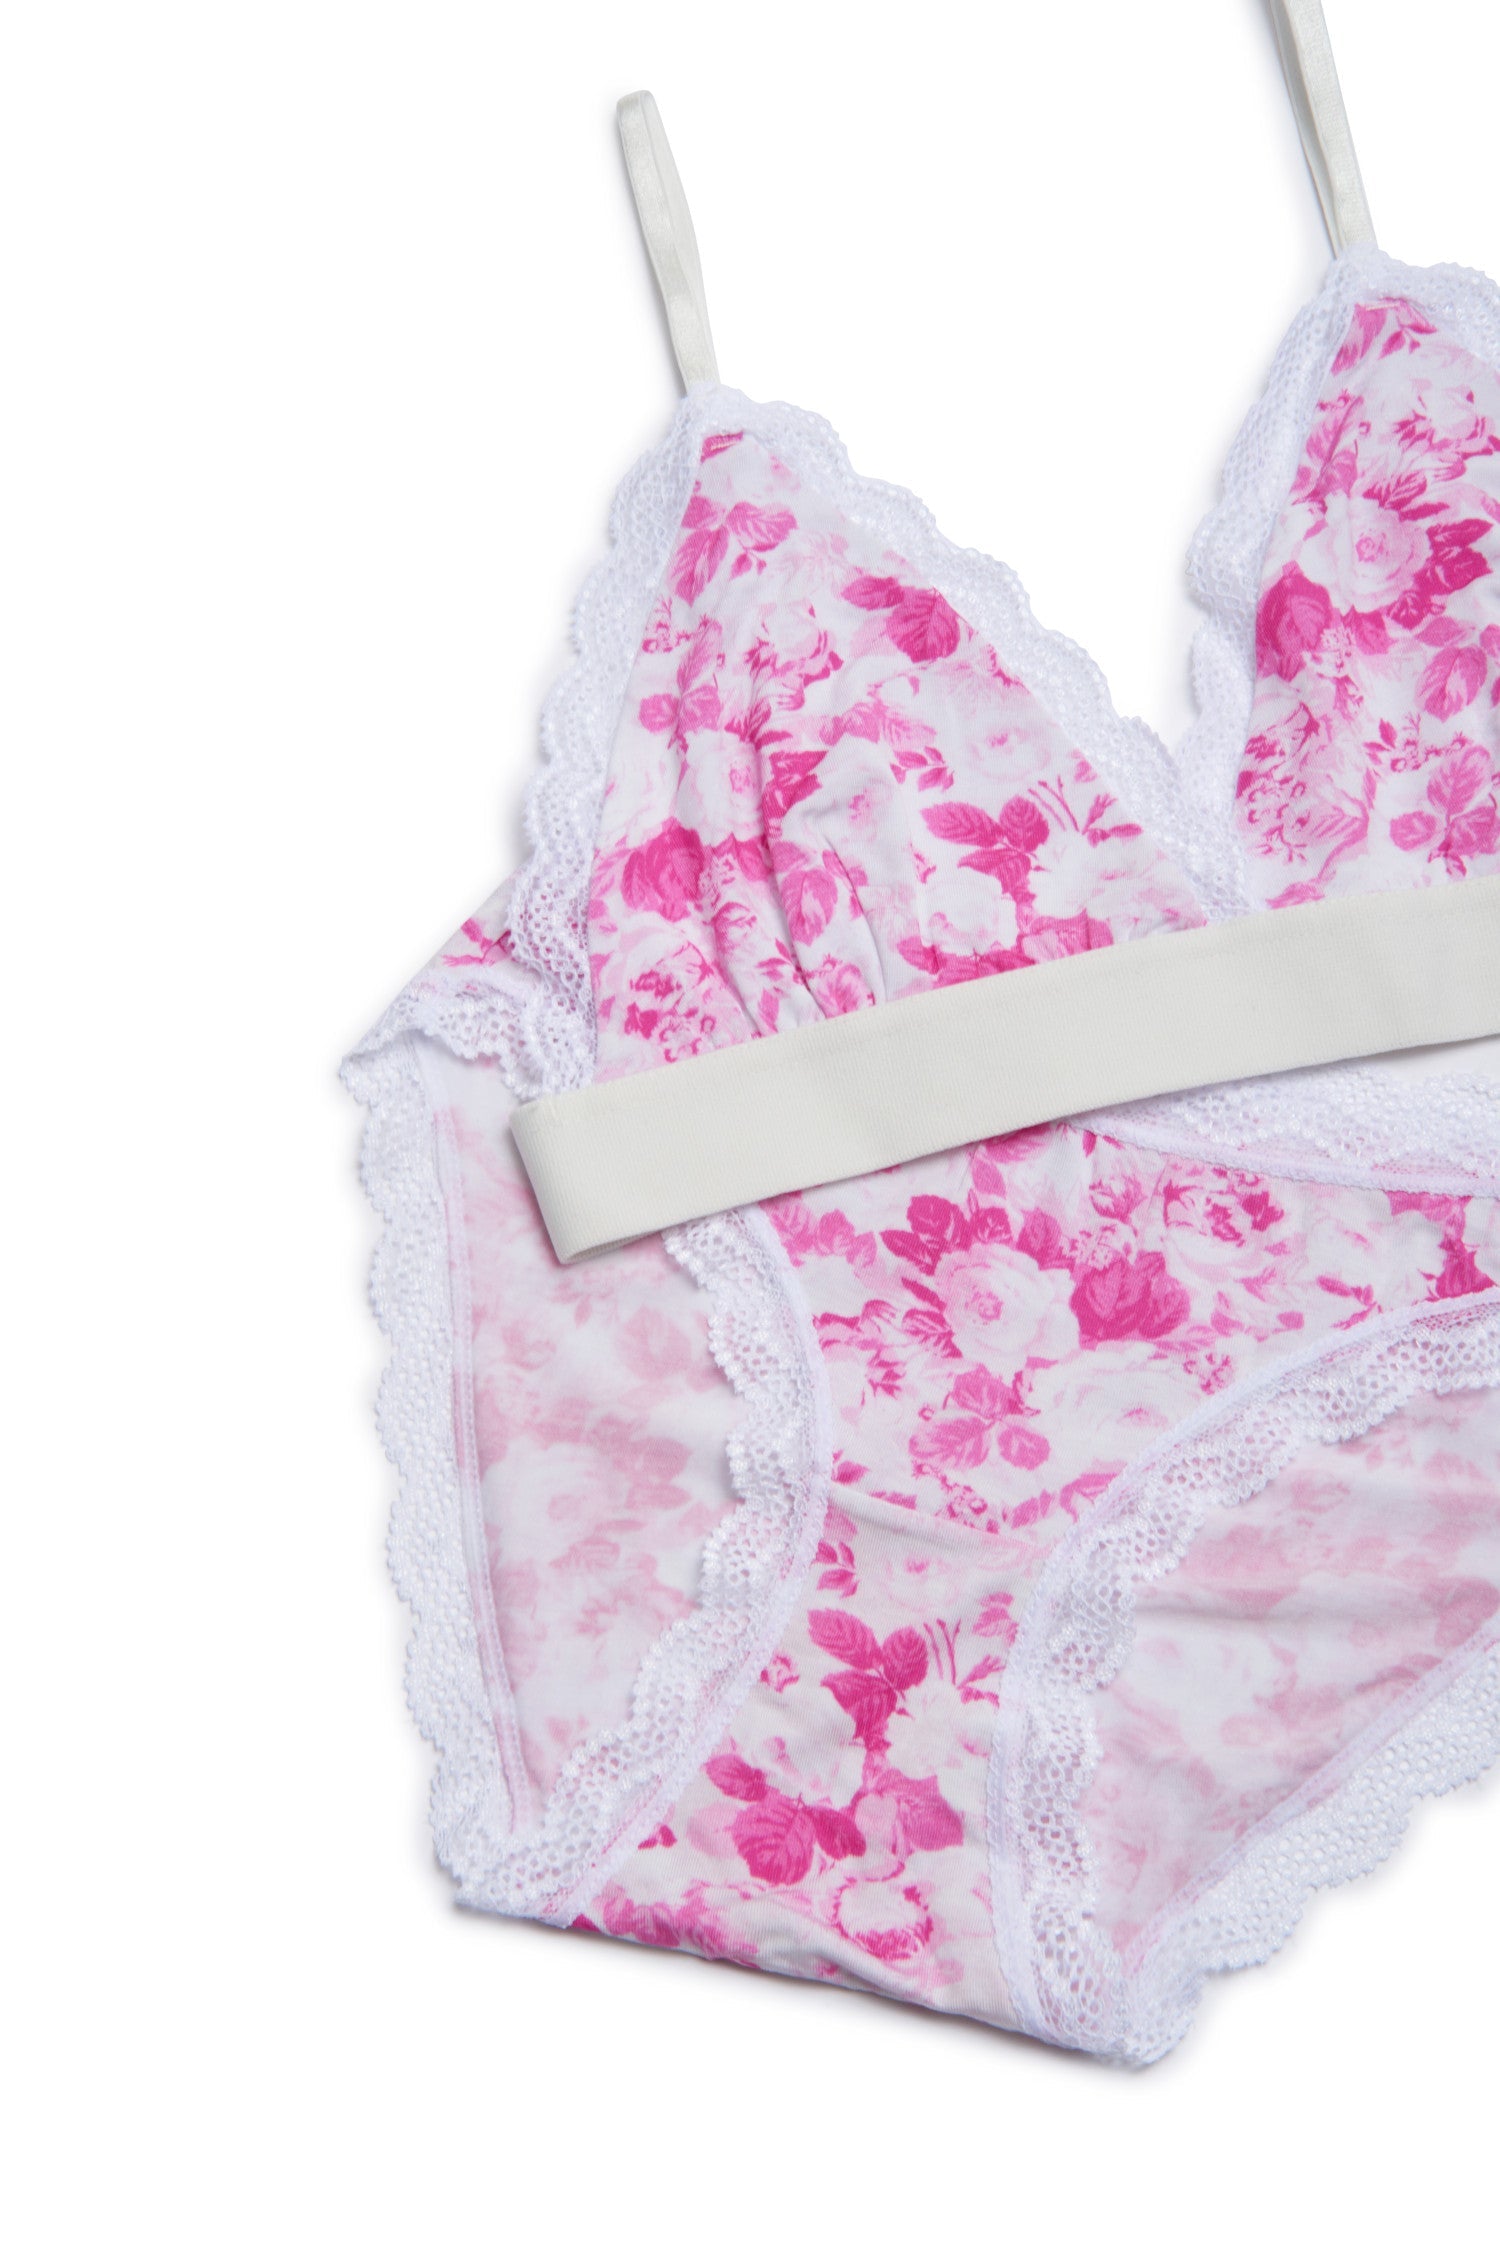 Cheap Lace Underwear Sets Striped One-Piece Bralette Women Home